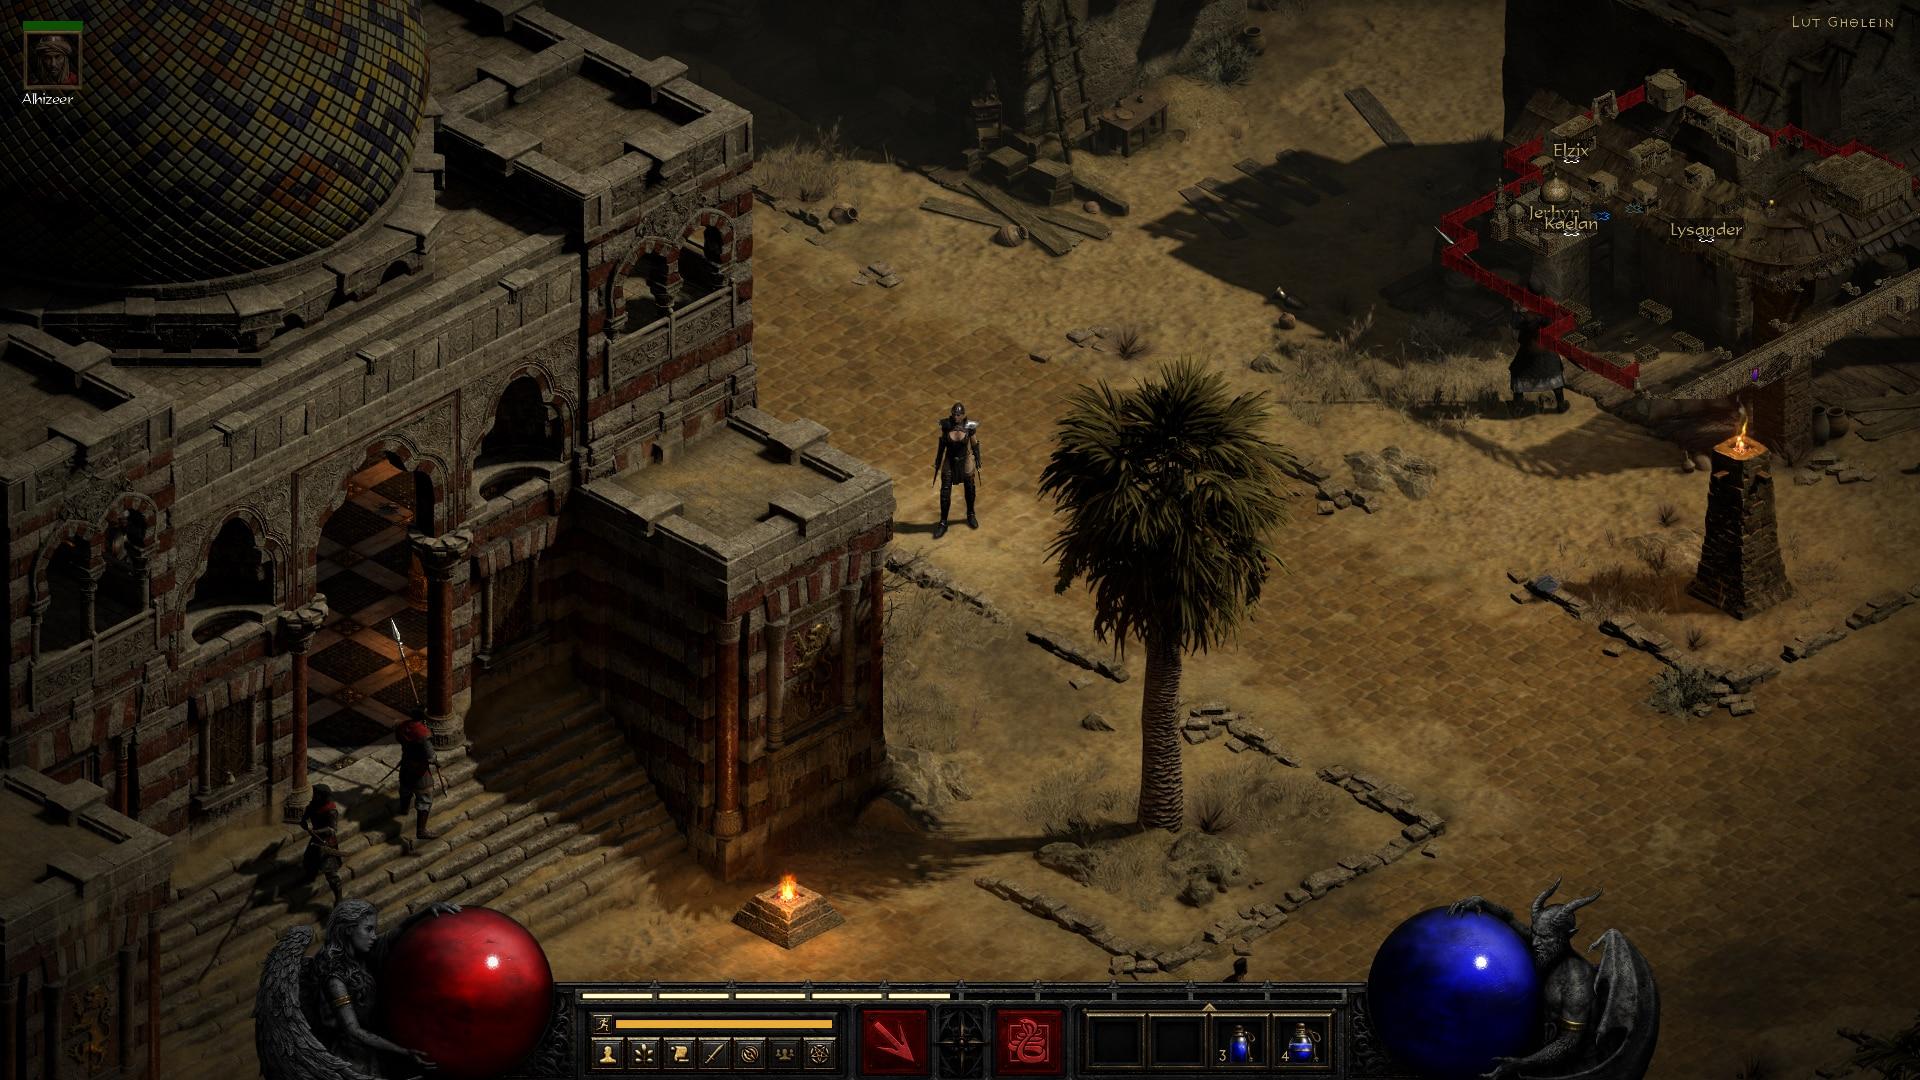 Diablo 2 Resurrected Lut Gholein palace